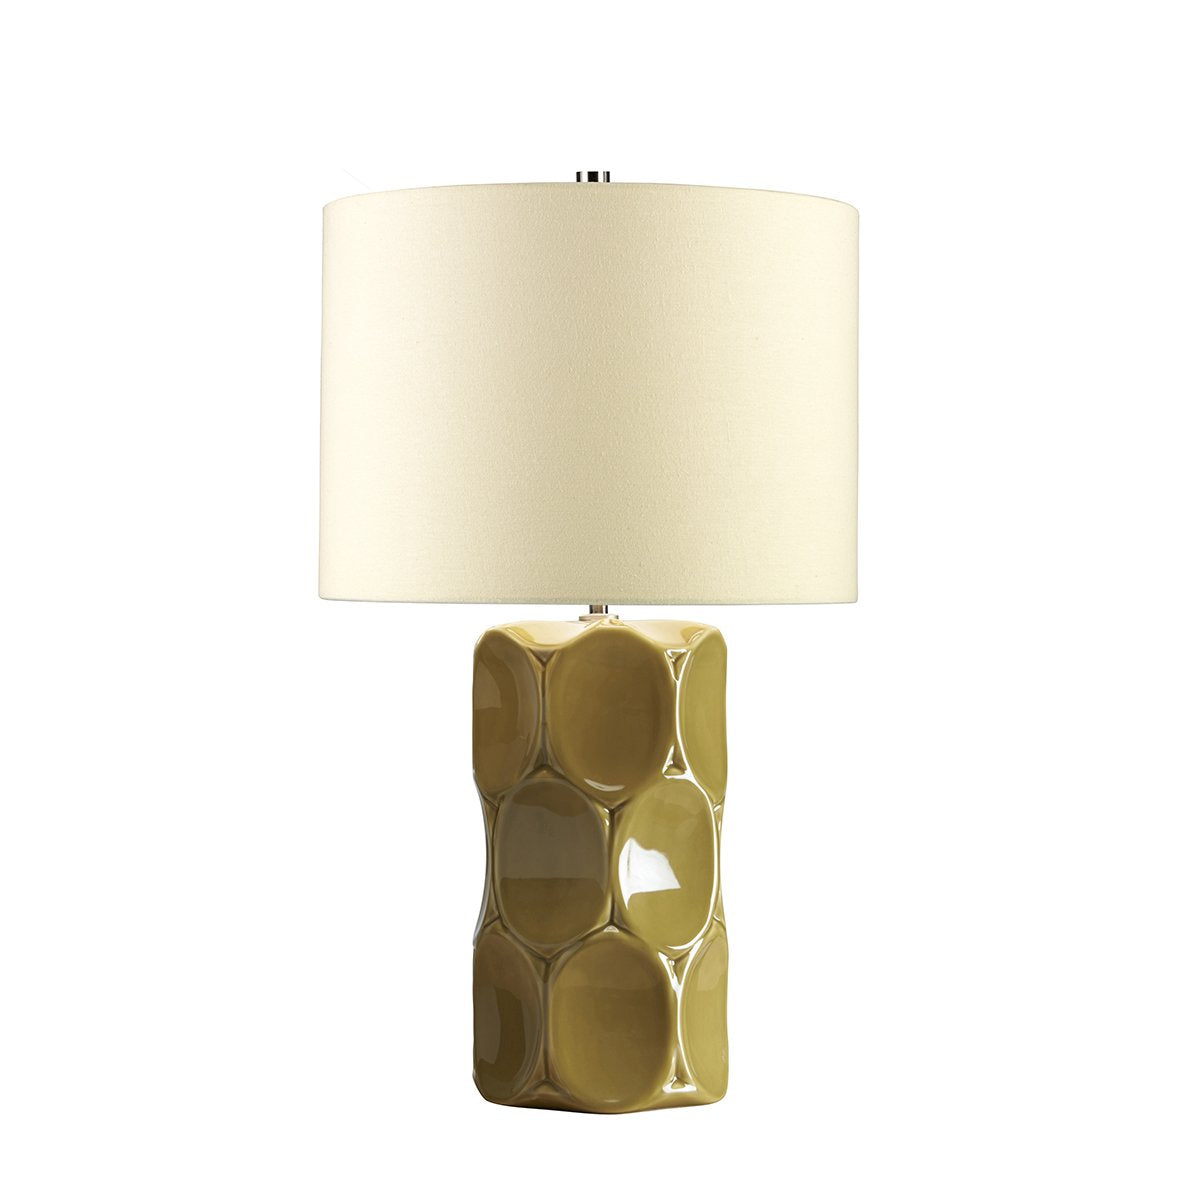 Golders Green Table Lamp c/w Shade - ID 8403